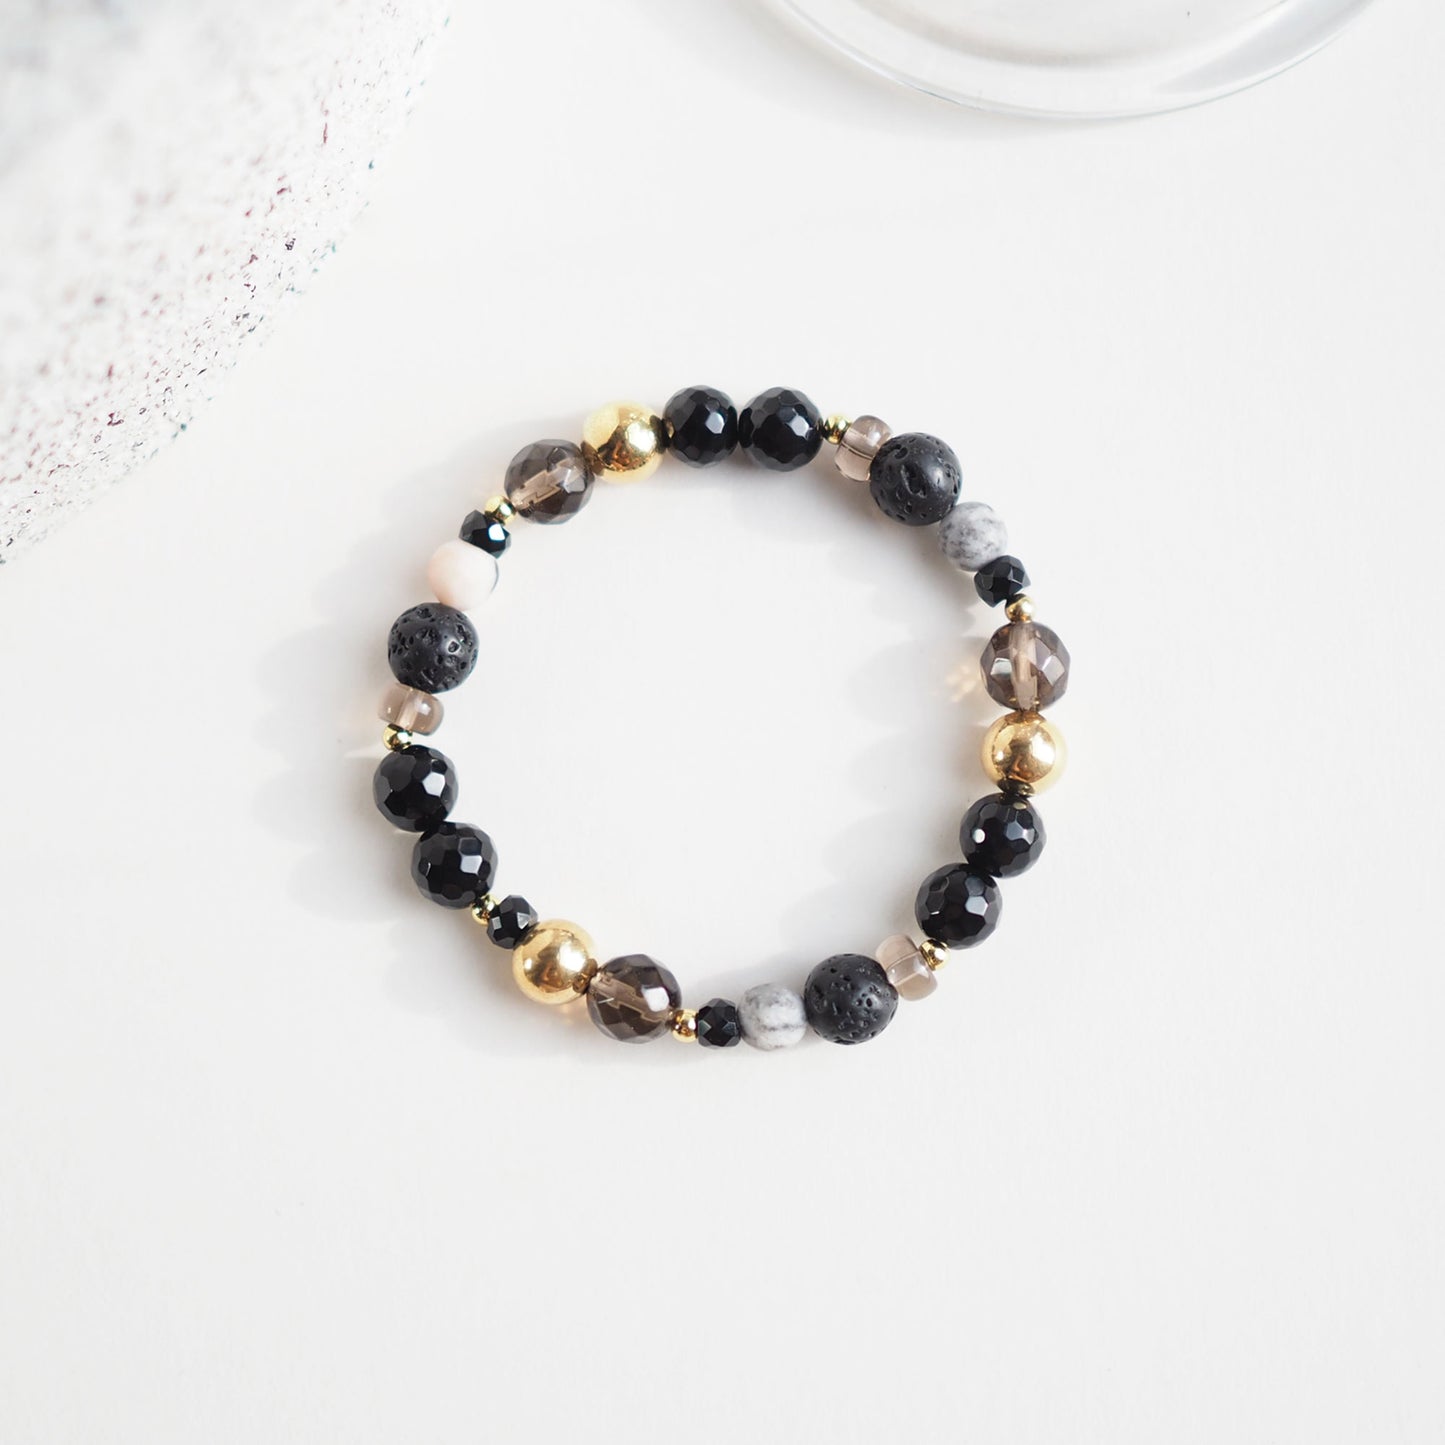 For Strength & Protection Women's Beaded Bracelet with Black Onyx, Lava Stone and Smoky Quartz